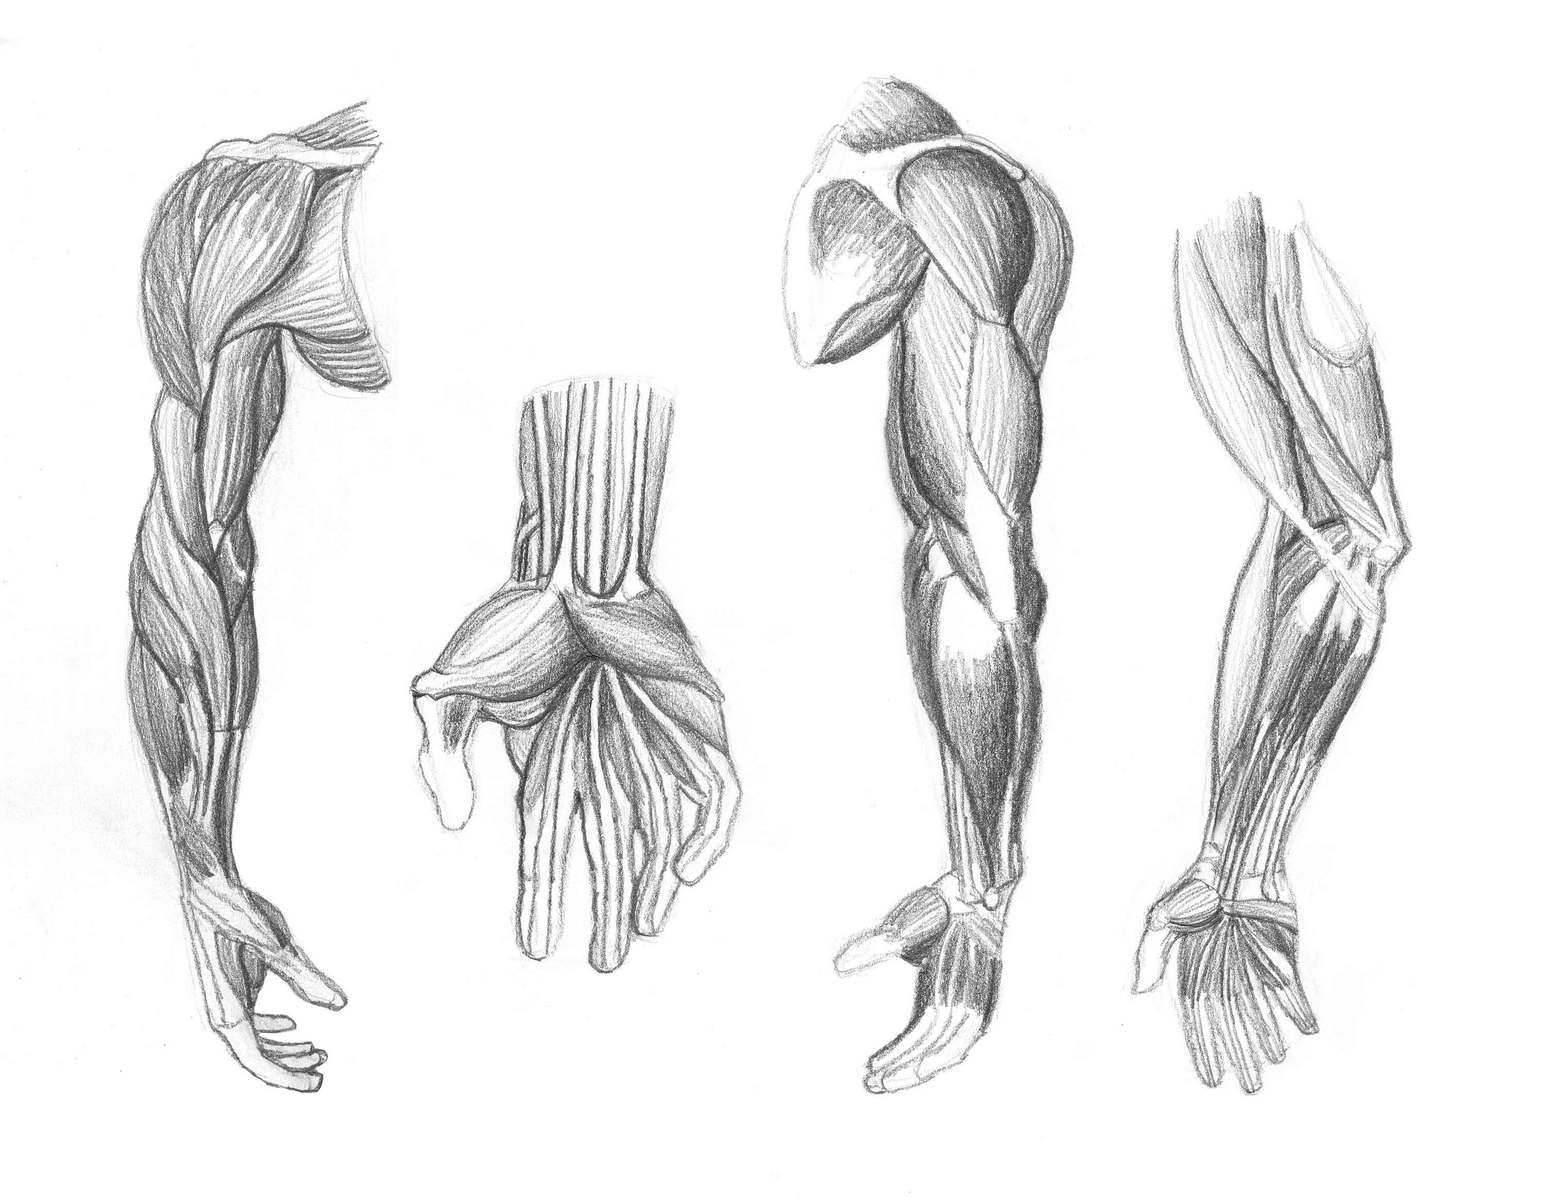 Arm musculature study